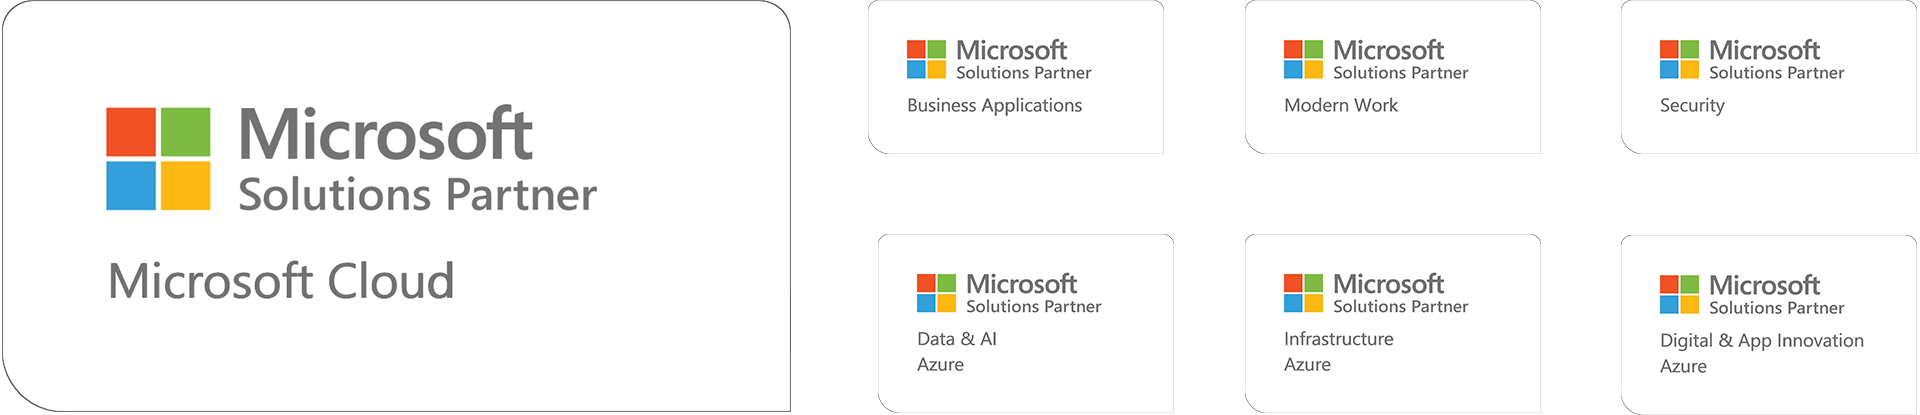 Microsoft Solutions Partner Microsoft Cloud, Business Applications, Modern Work, Security, Data & AI Azure, Infrastructure Azure, Digital & App Innovation Azure logos